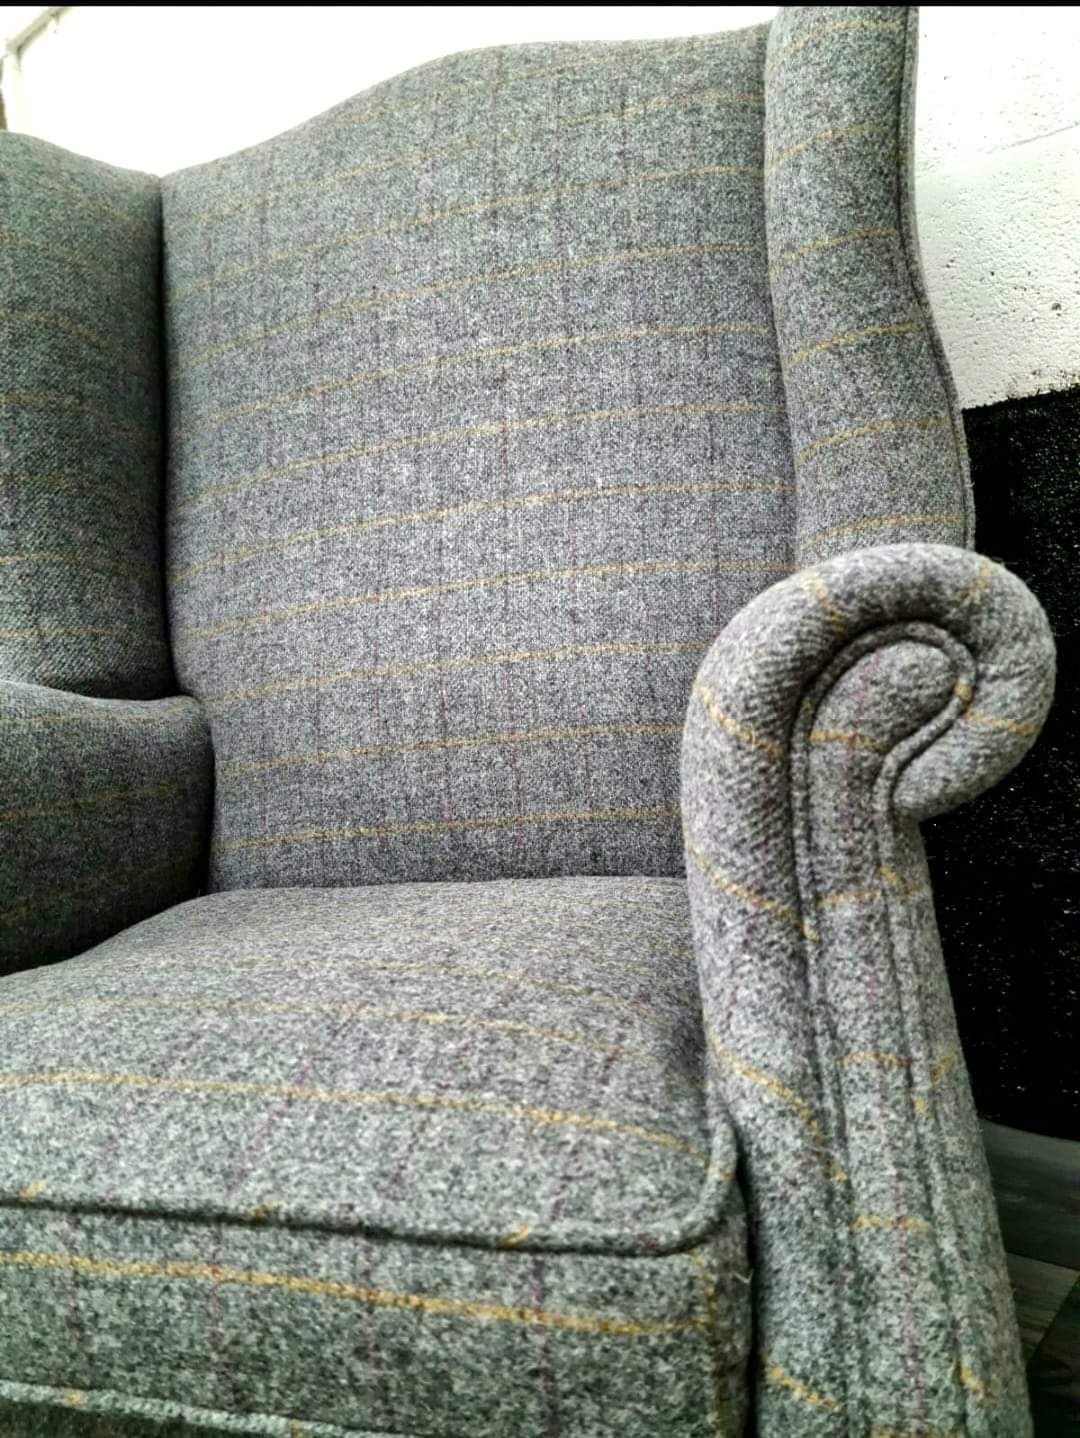 Christopher pratt cambridge armchair reupholstered in harris tweed huntsman slate gray upholstery 